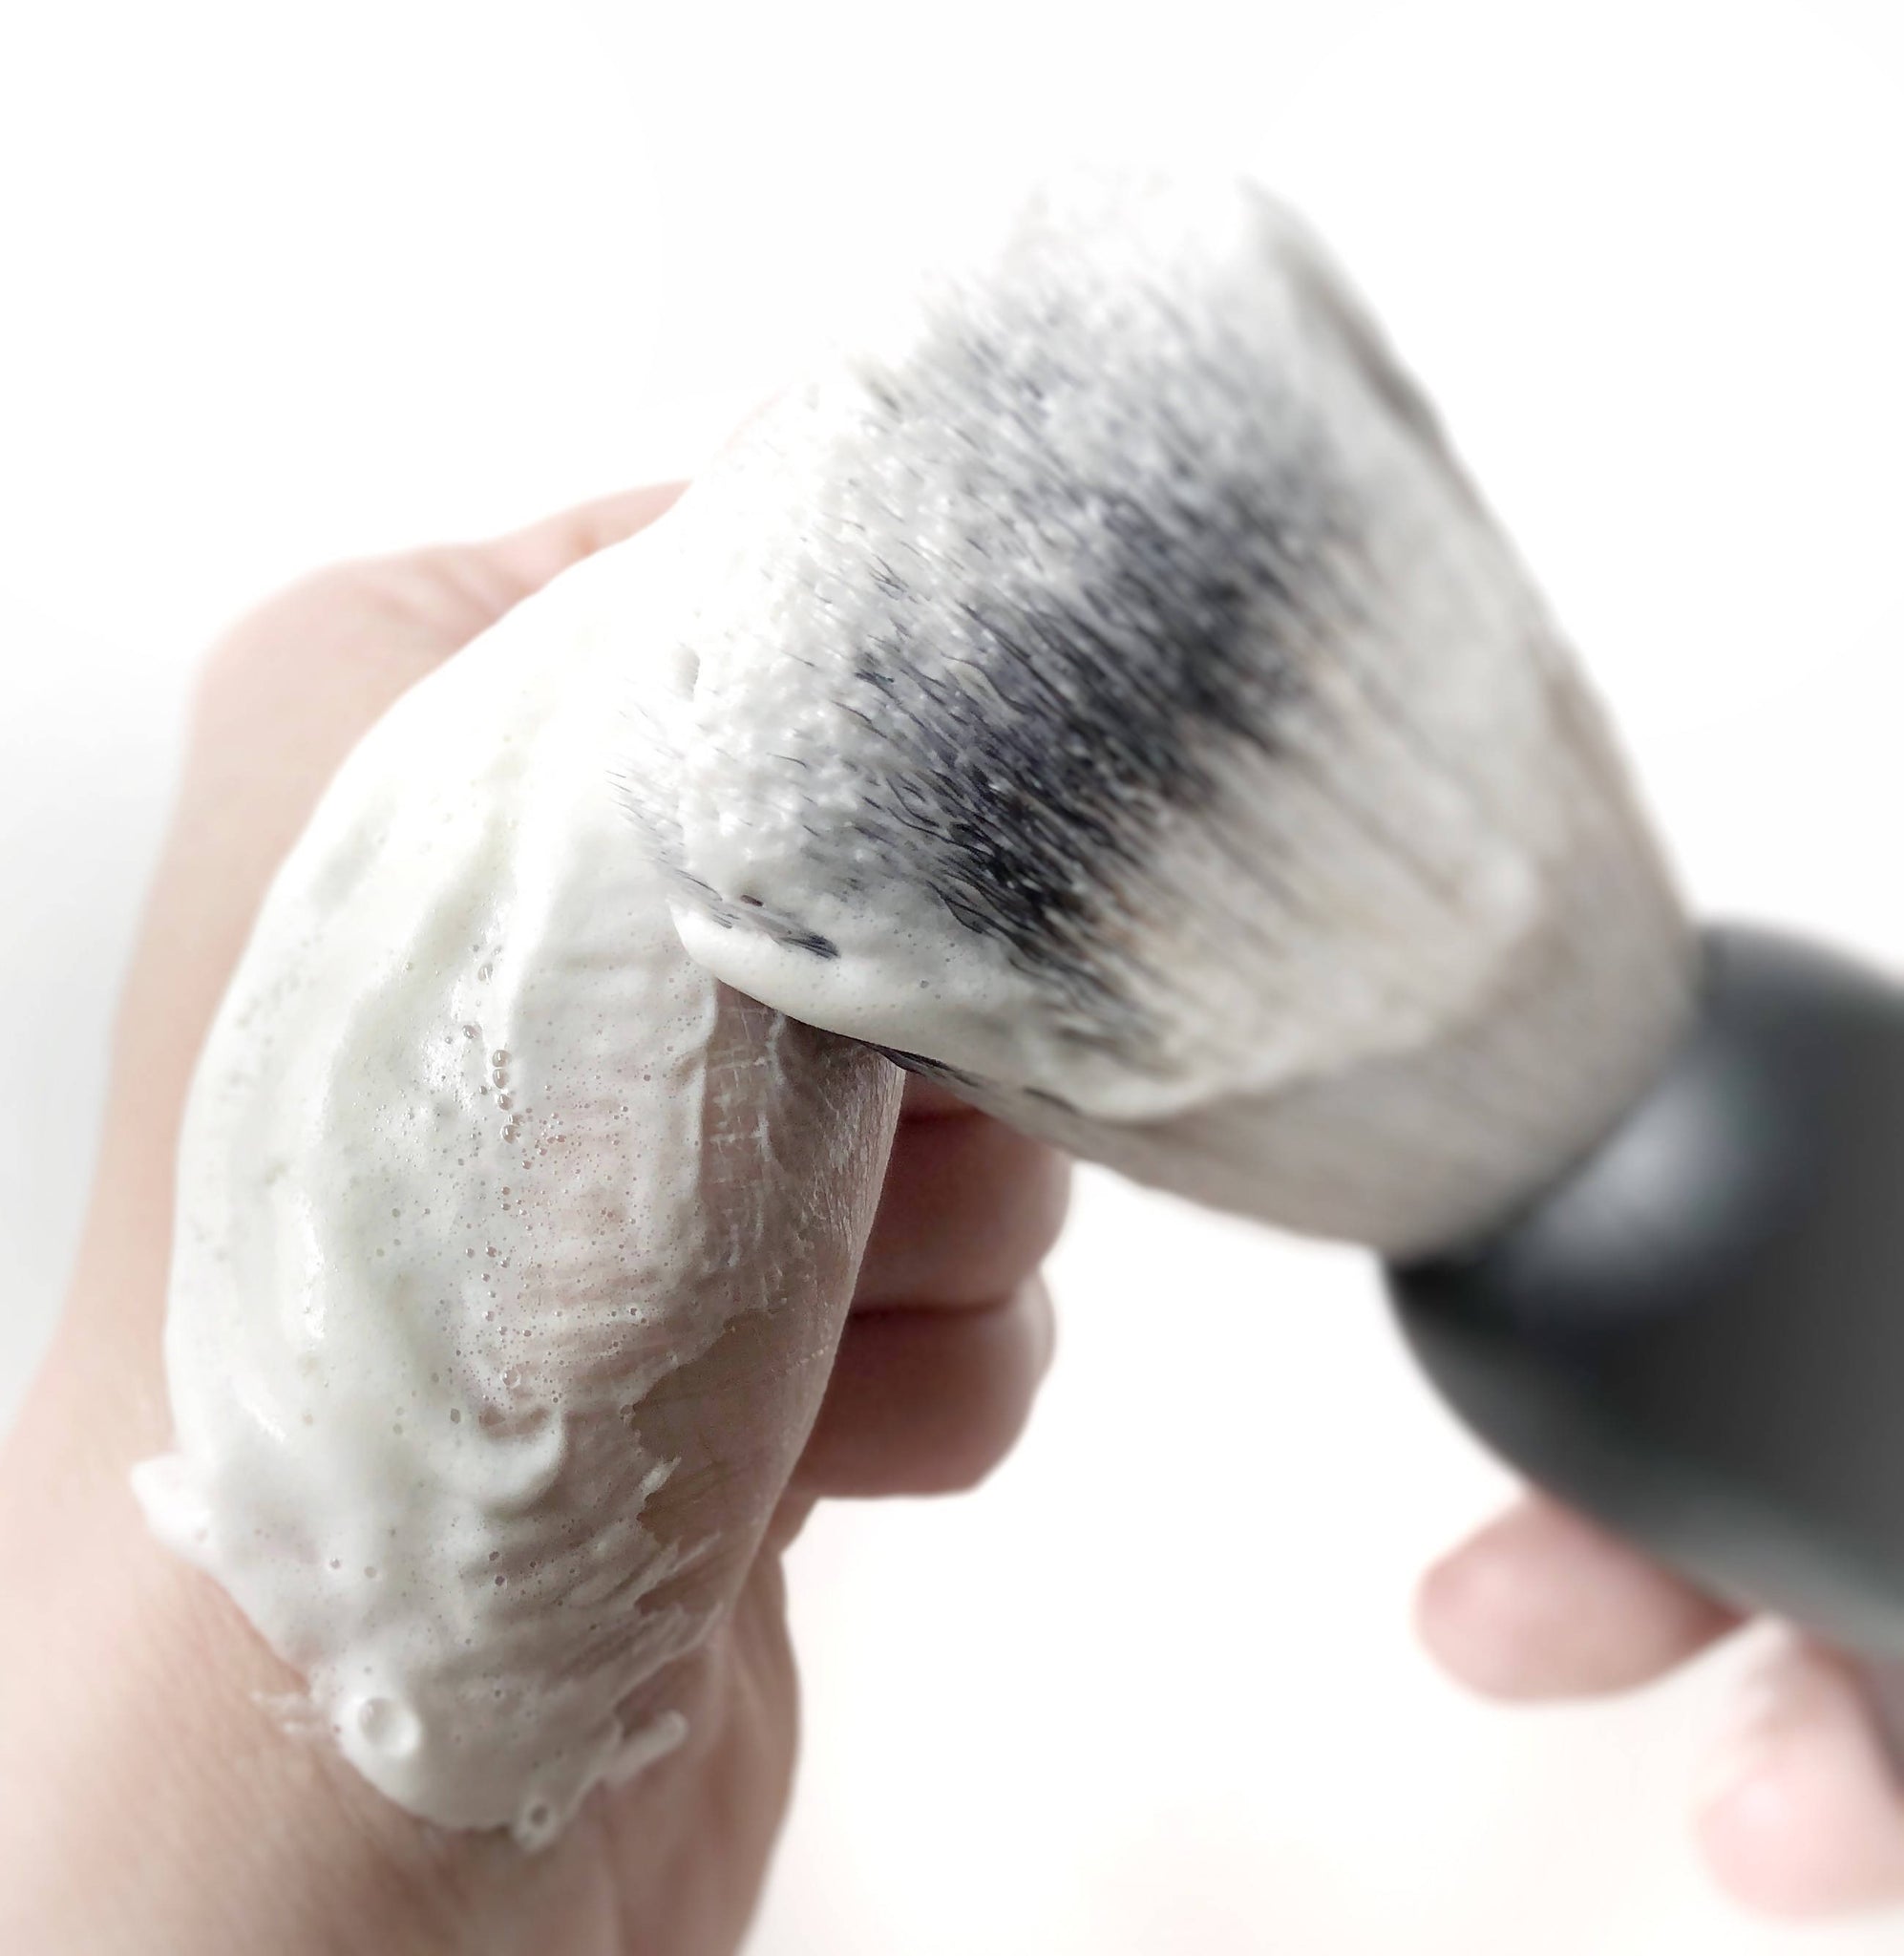 Goose Bay hemp shave soap - WEKUSKO WILD Boreal Skincare